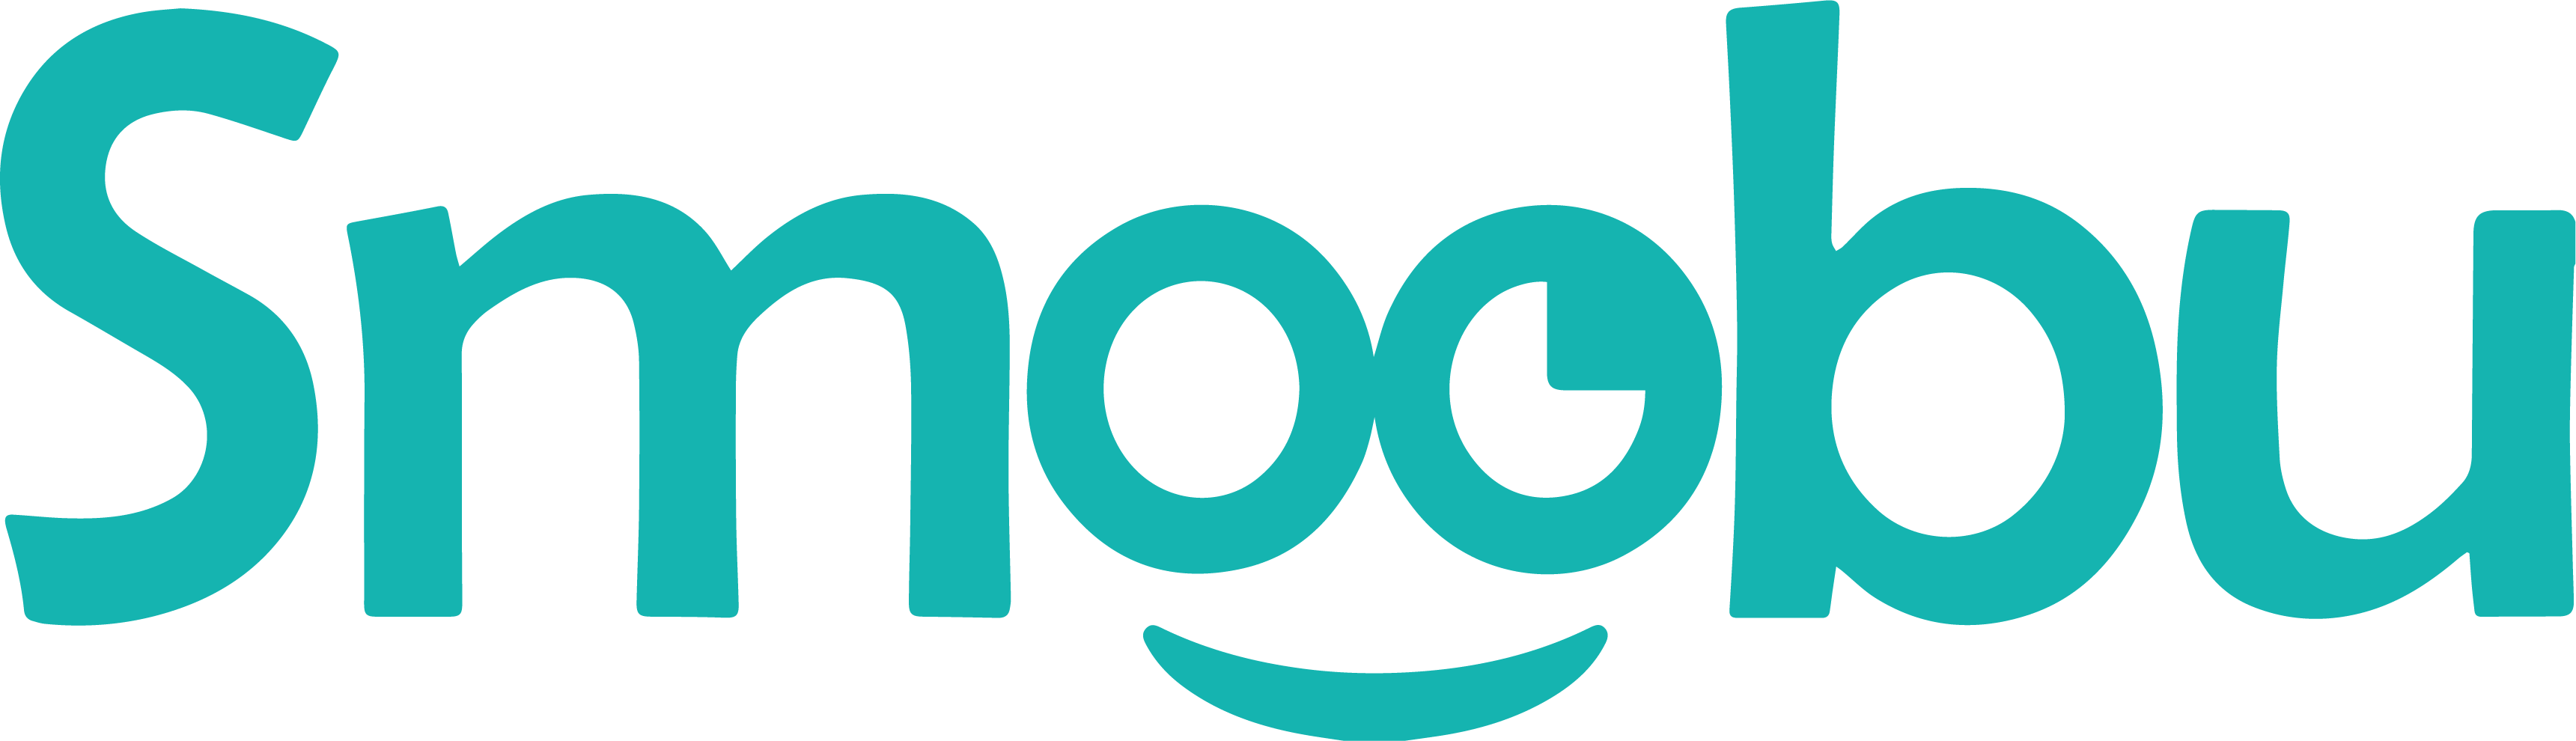 Logo Smoobu